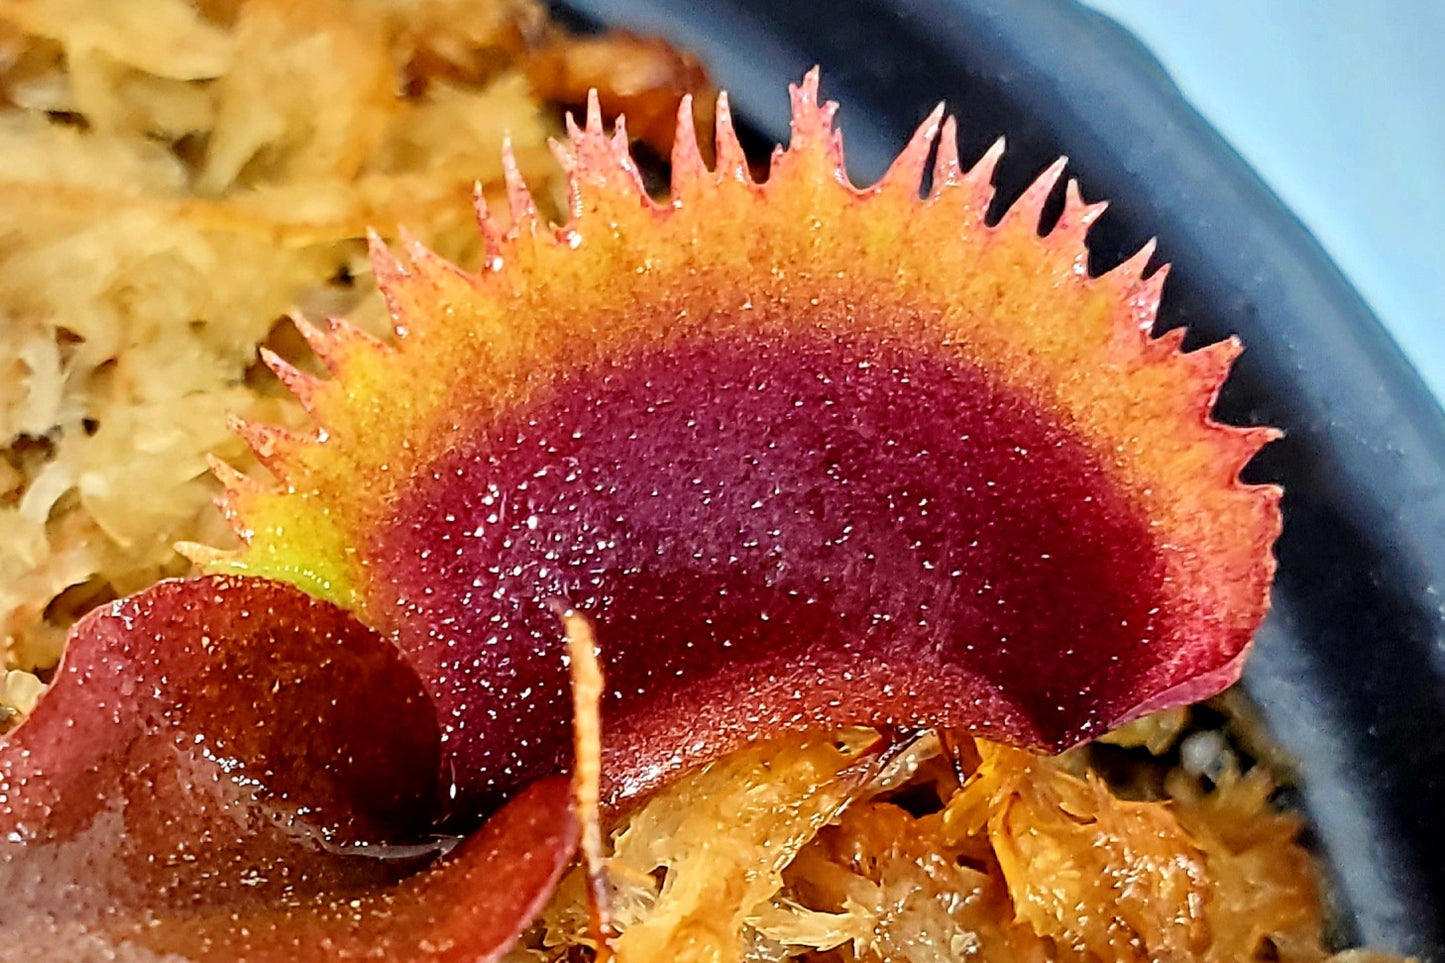 Bohemian Garnet - Venus Flytrap Carnivorous Plant